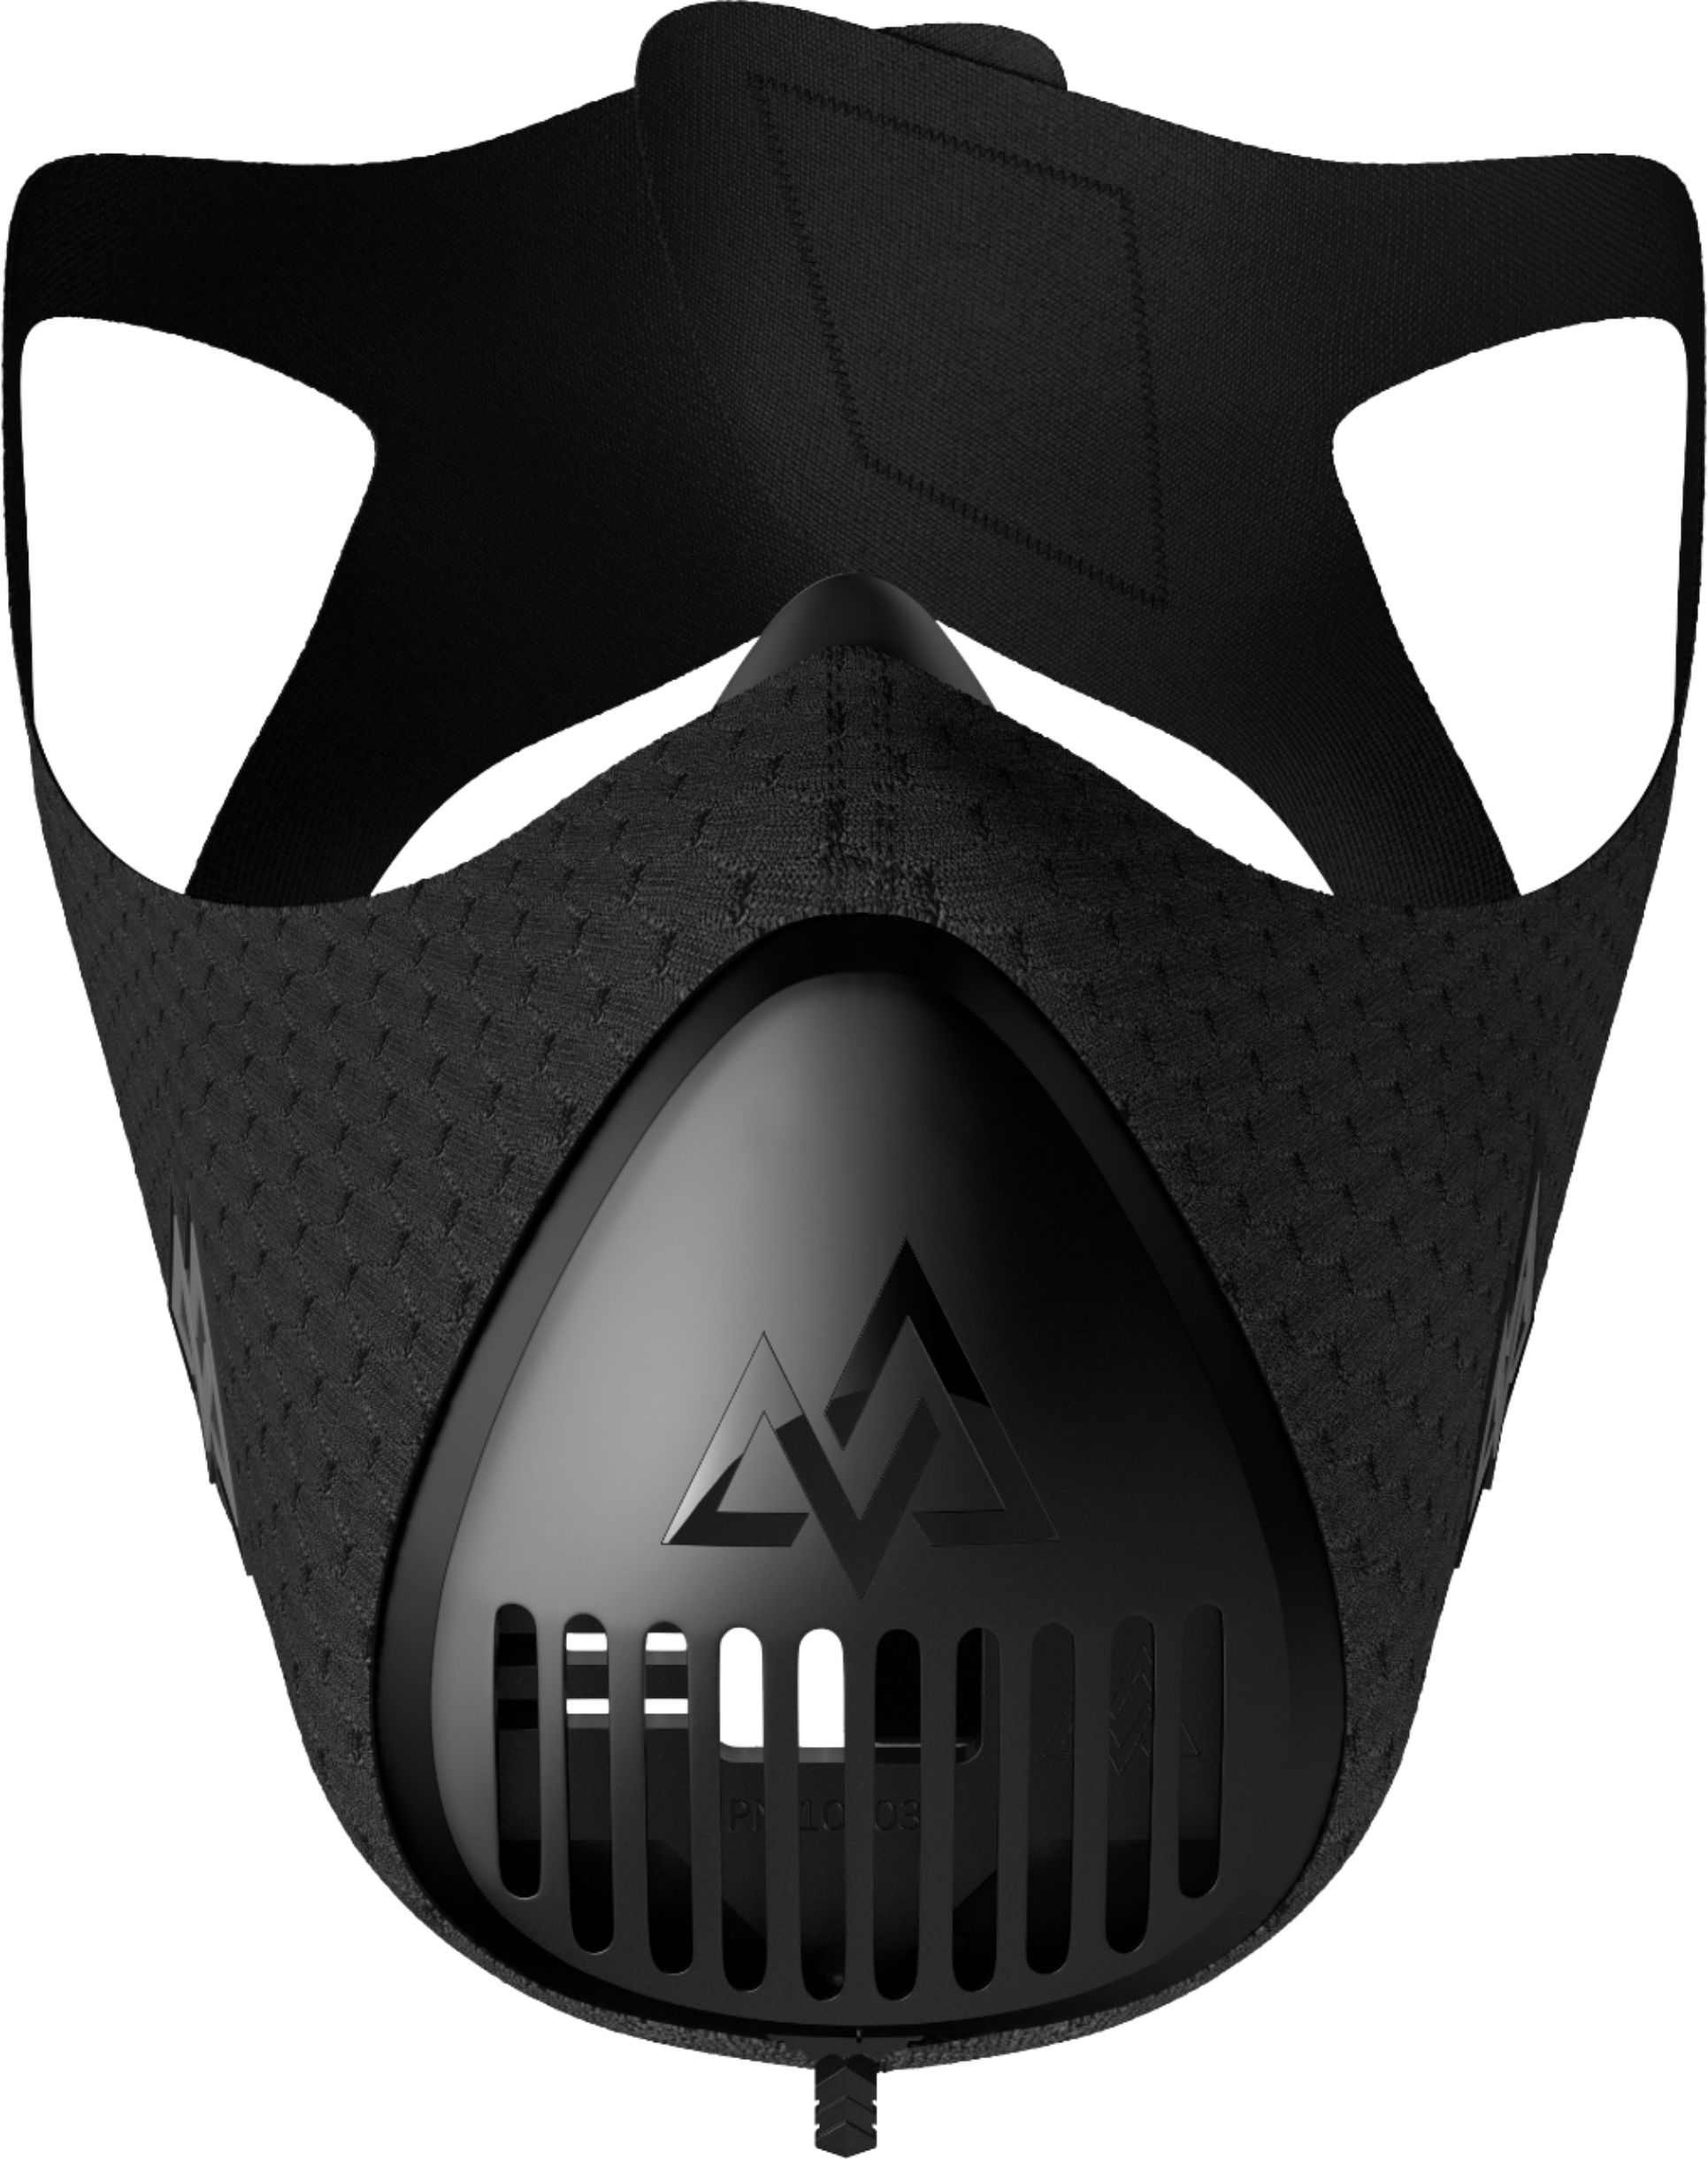 Training Mask 3.0-Medium Black 300013 - Best Buy